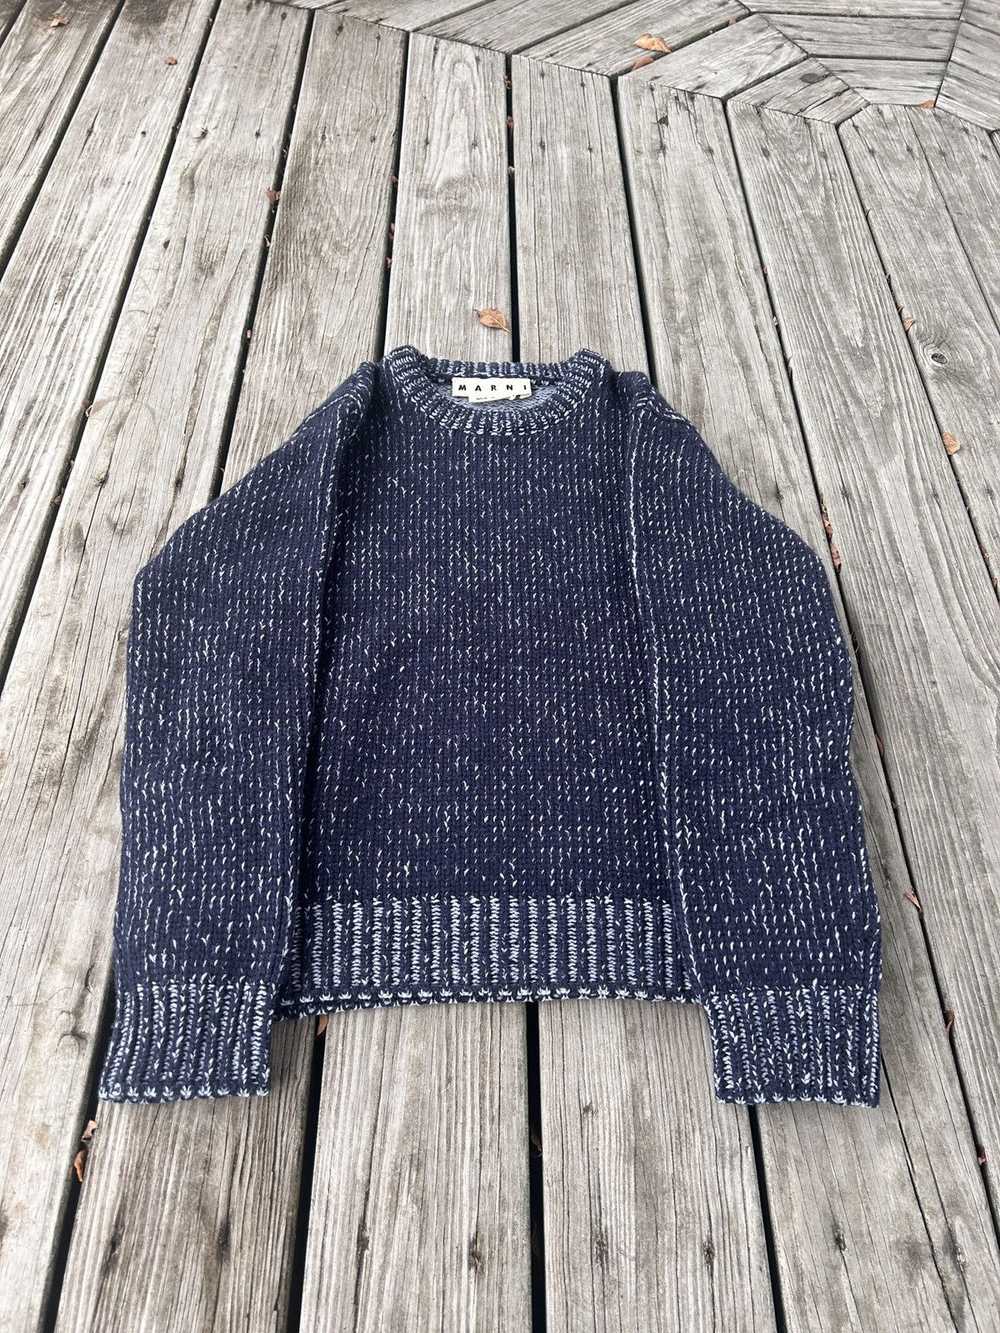 Marni Marni Mohair Sweater - image 3